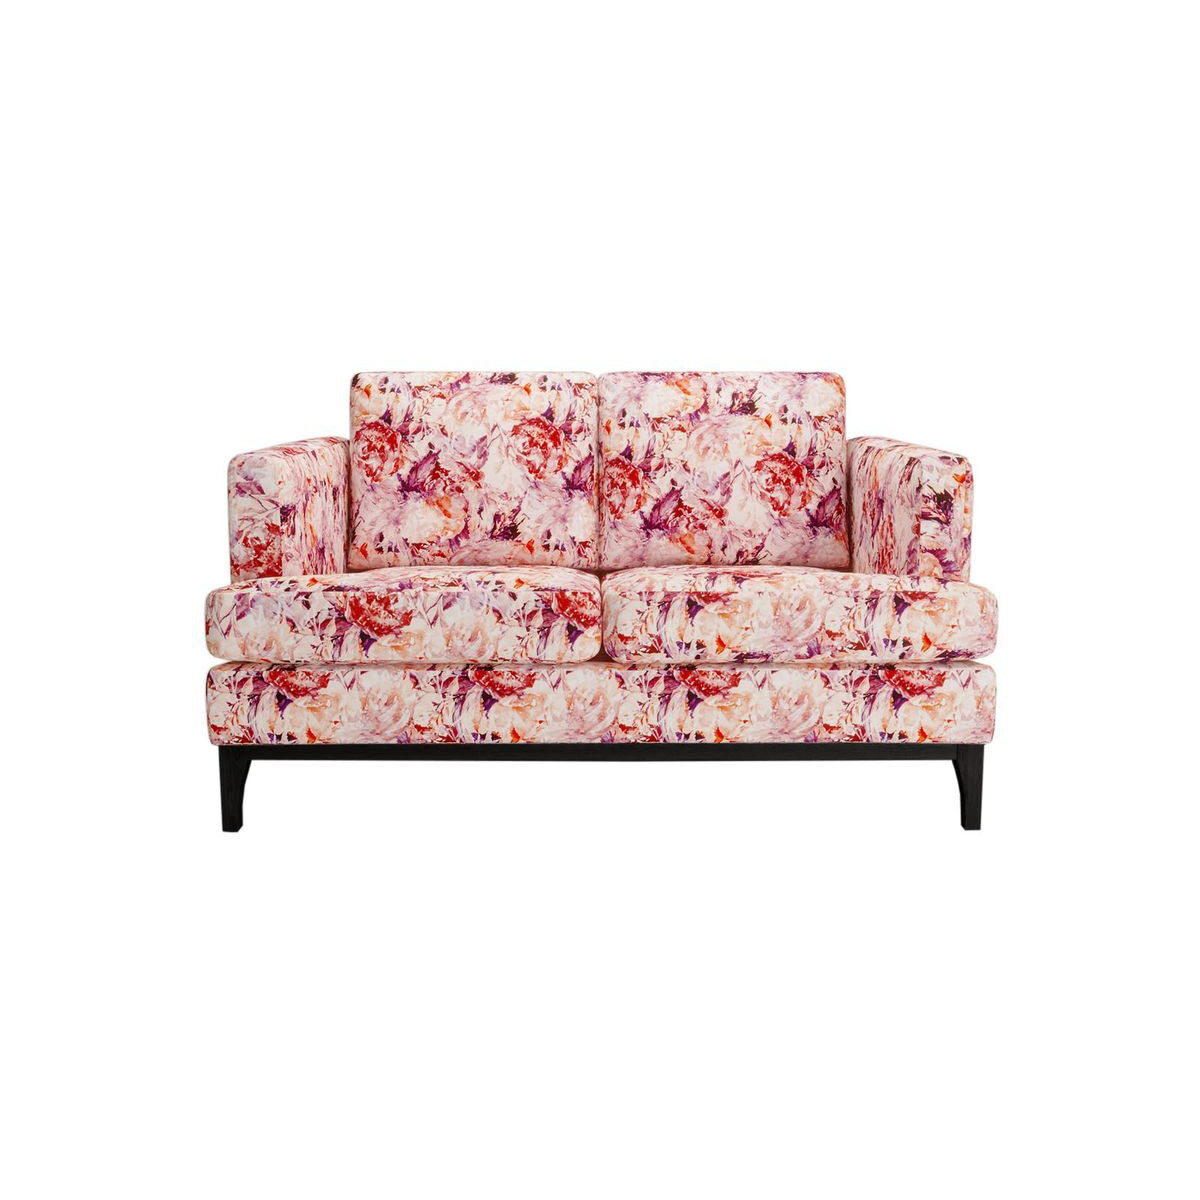 Scarlett Design 2 Seater Sofa, cream, Leg colour: aveo - image 1